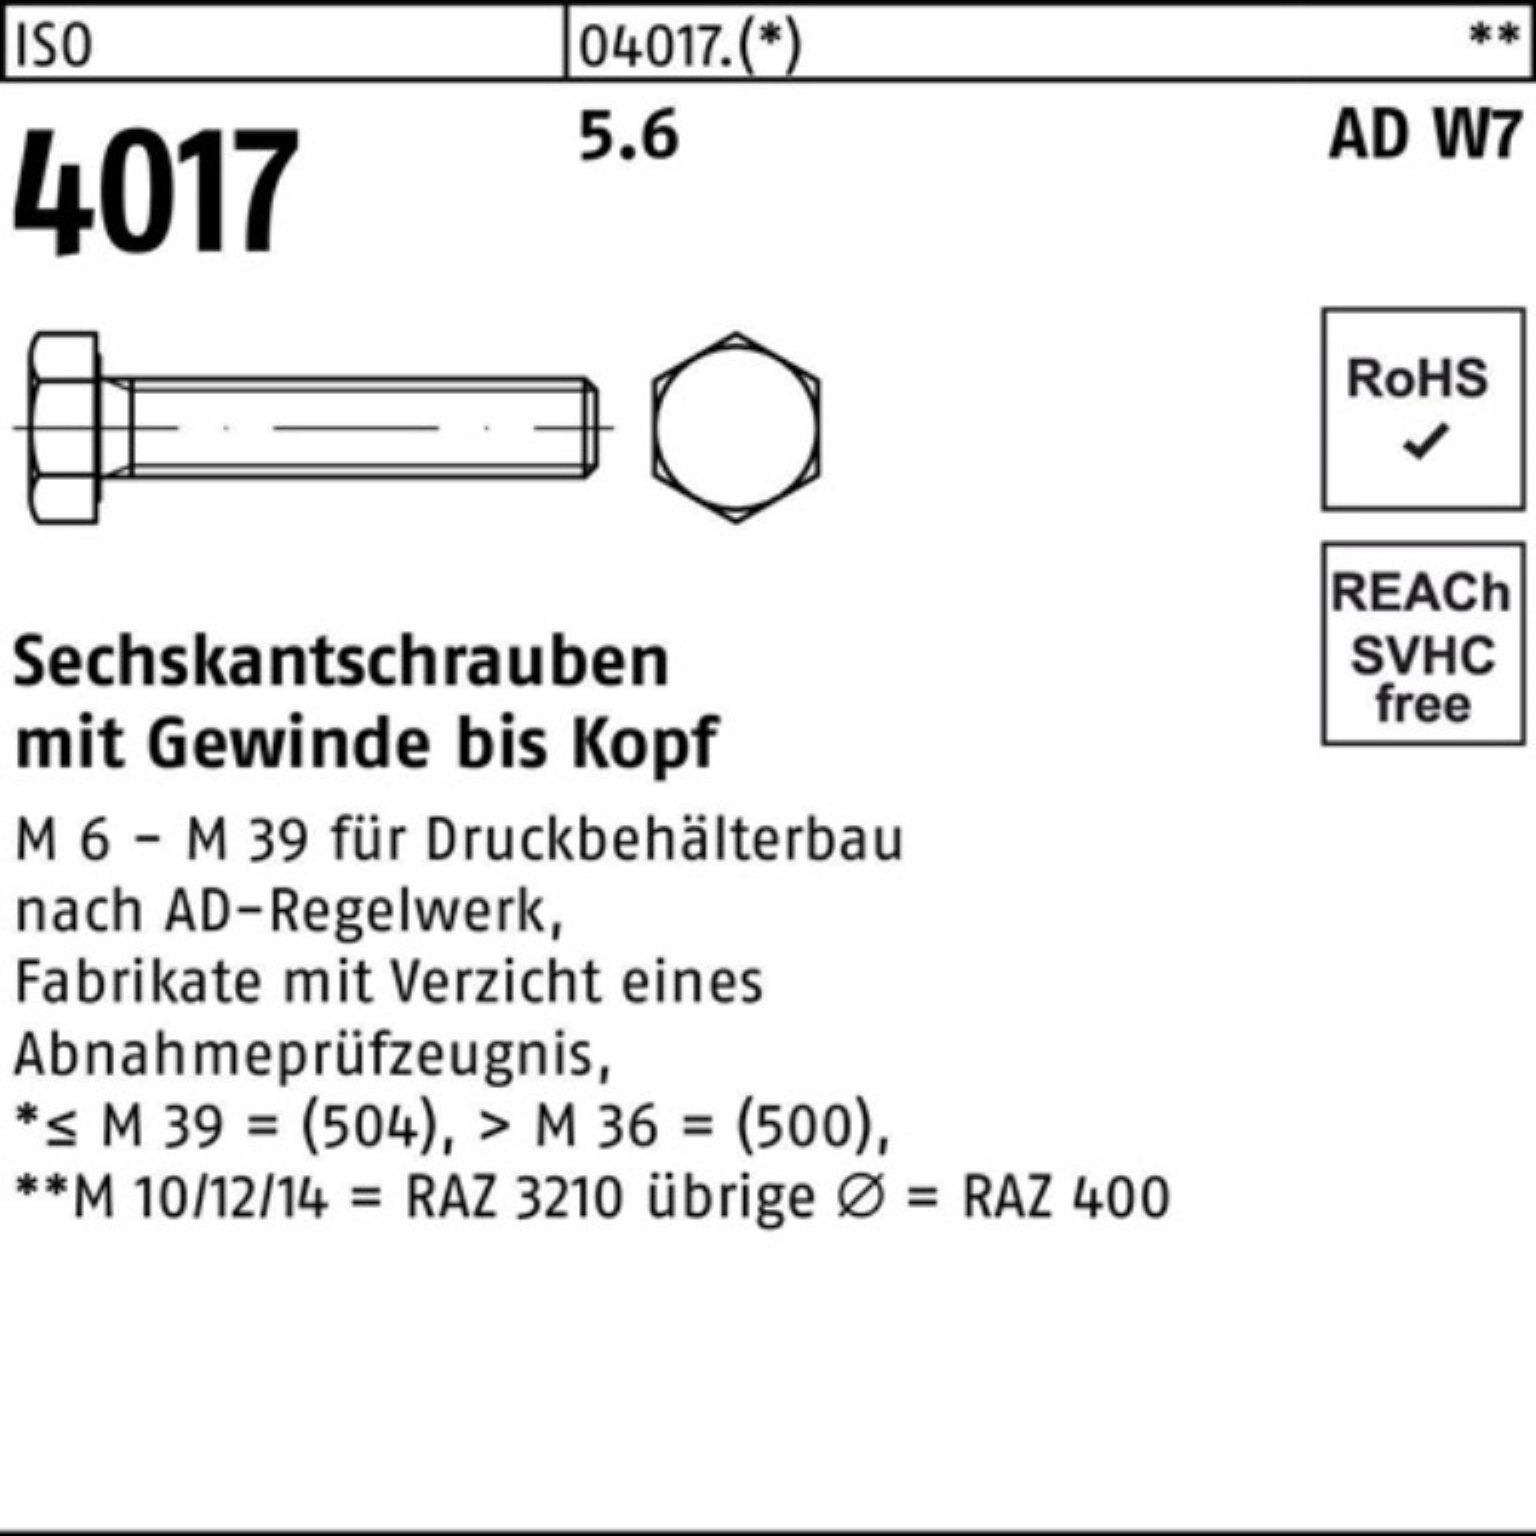 Bufab Sechskantschraube 100er Pack Stück AD 70 25 4017 Sechskantschraube 5.6 M20x W7 VG I ISO